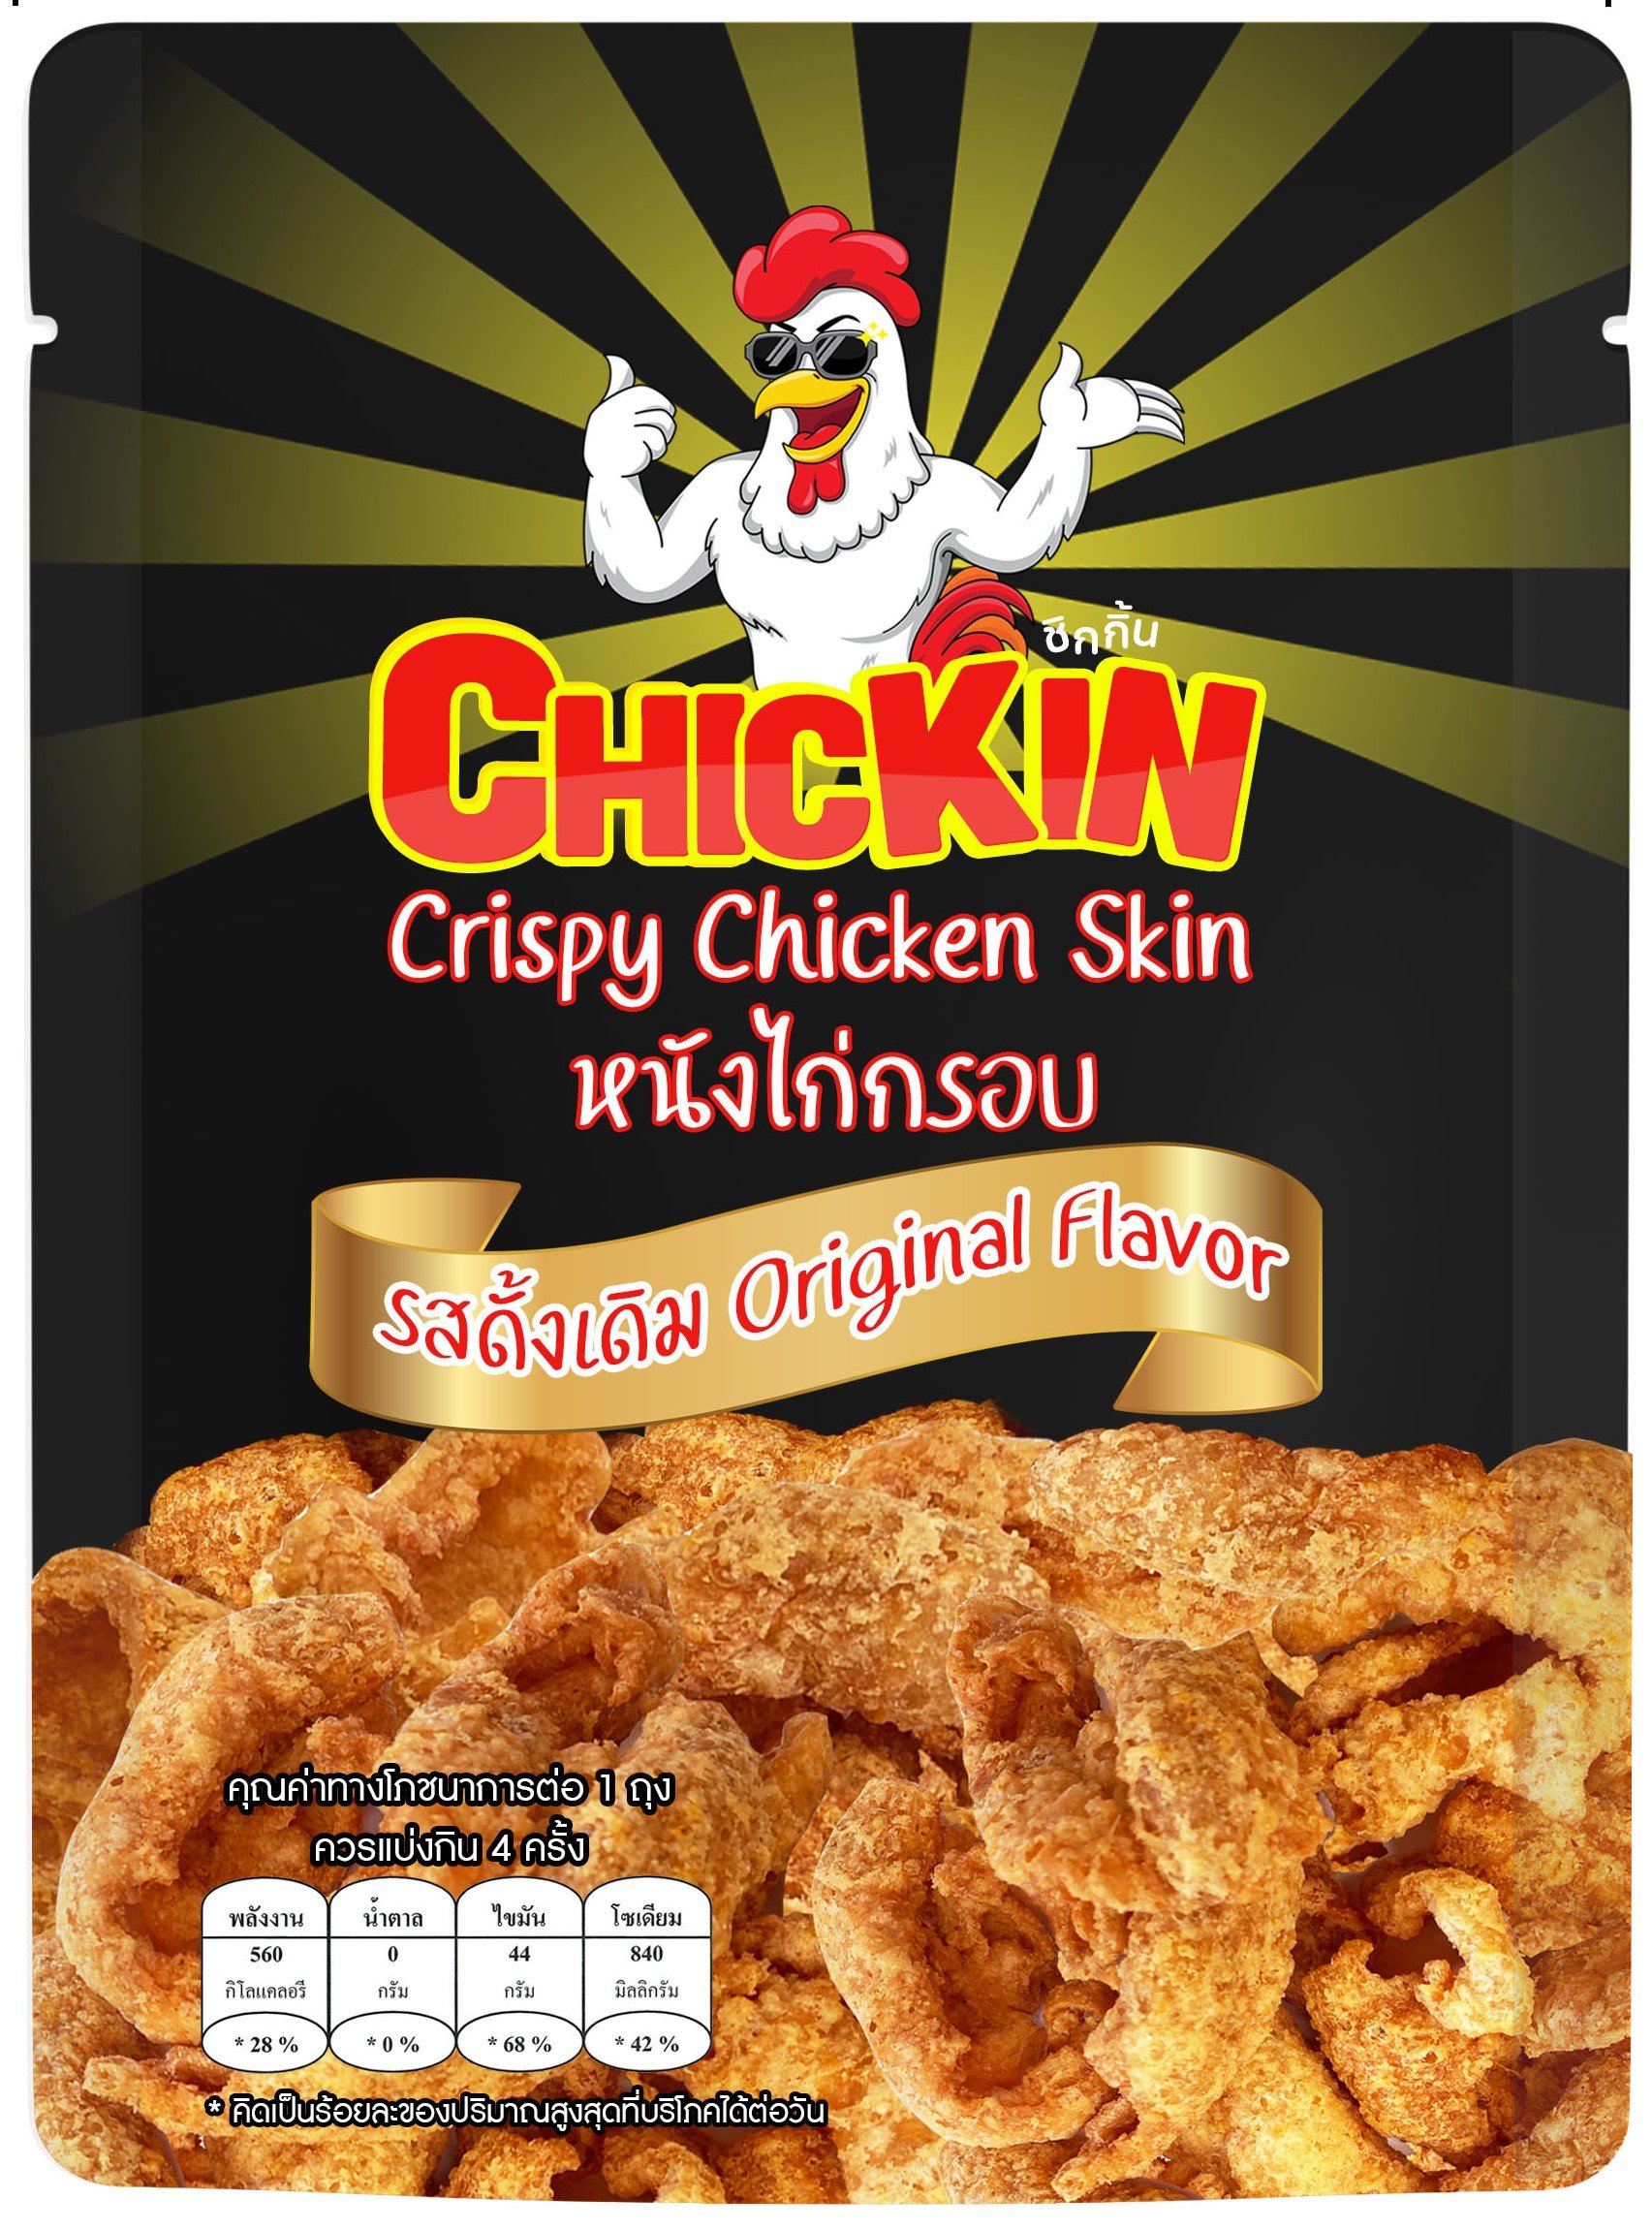 -CHICKIN BRAND- CrispyChikenSkin Original Flavor